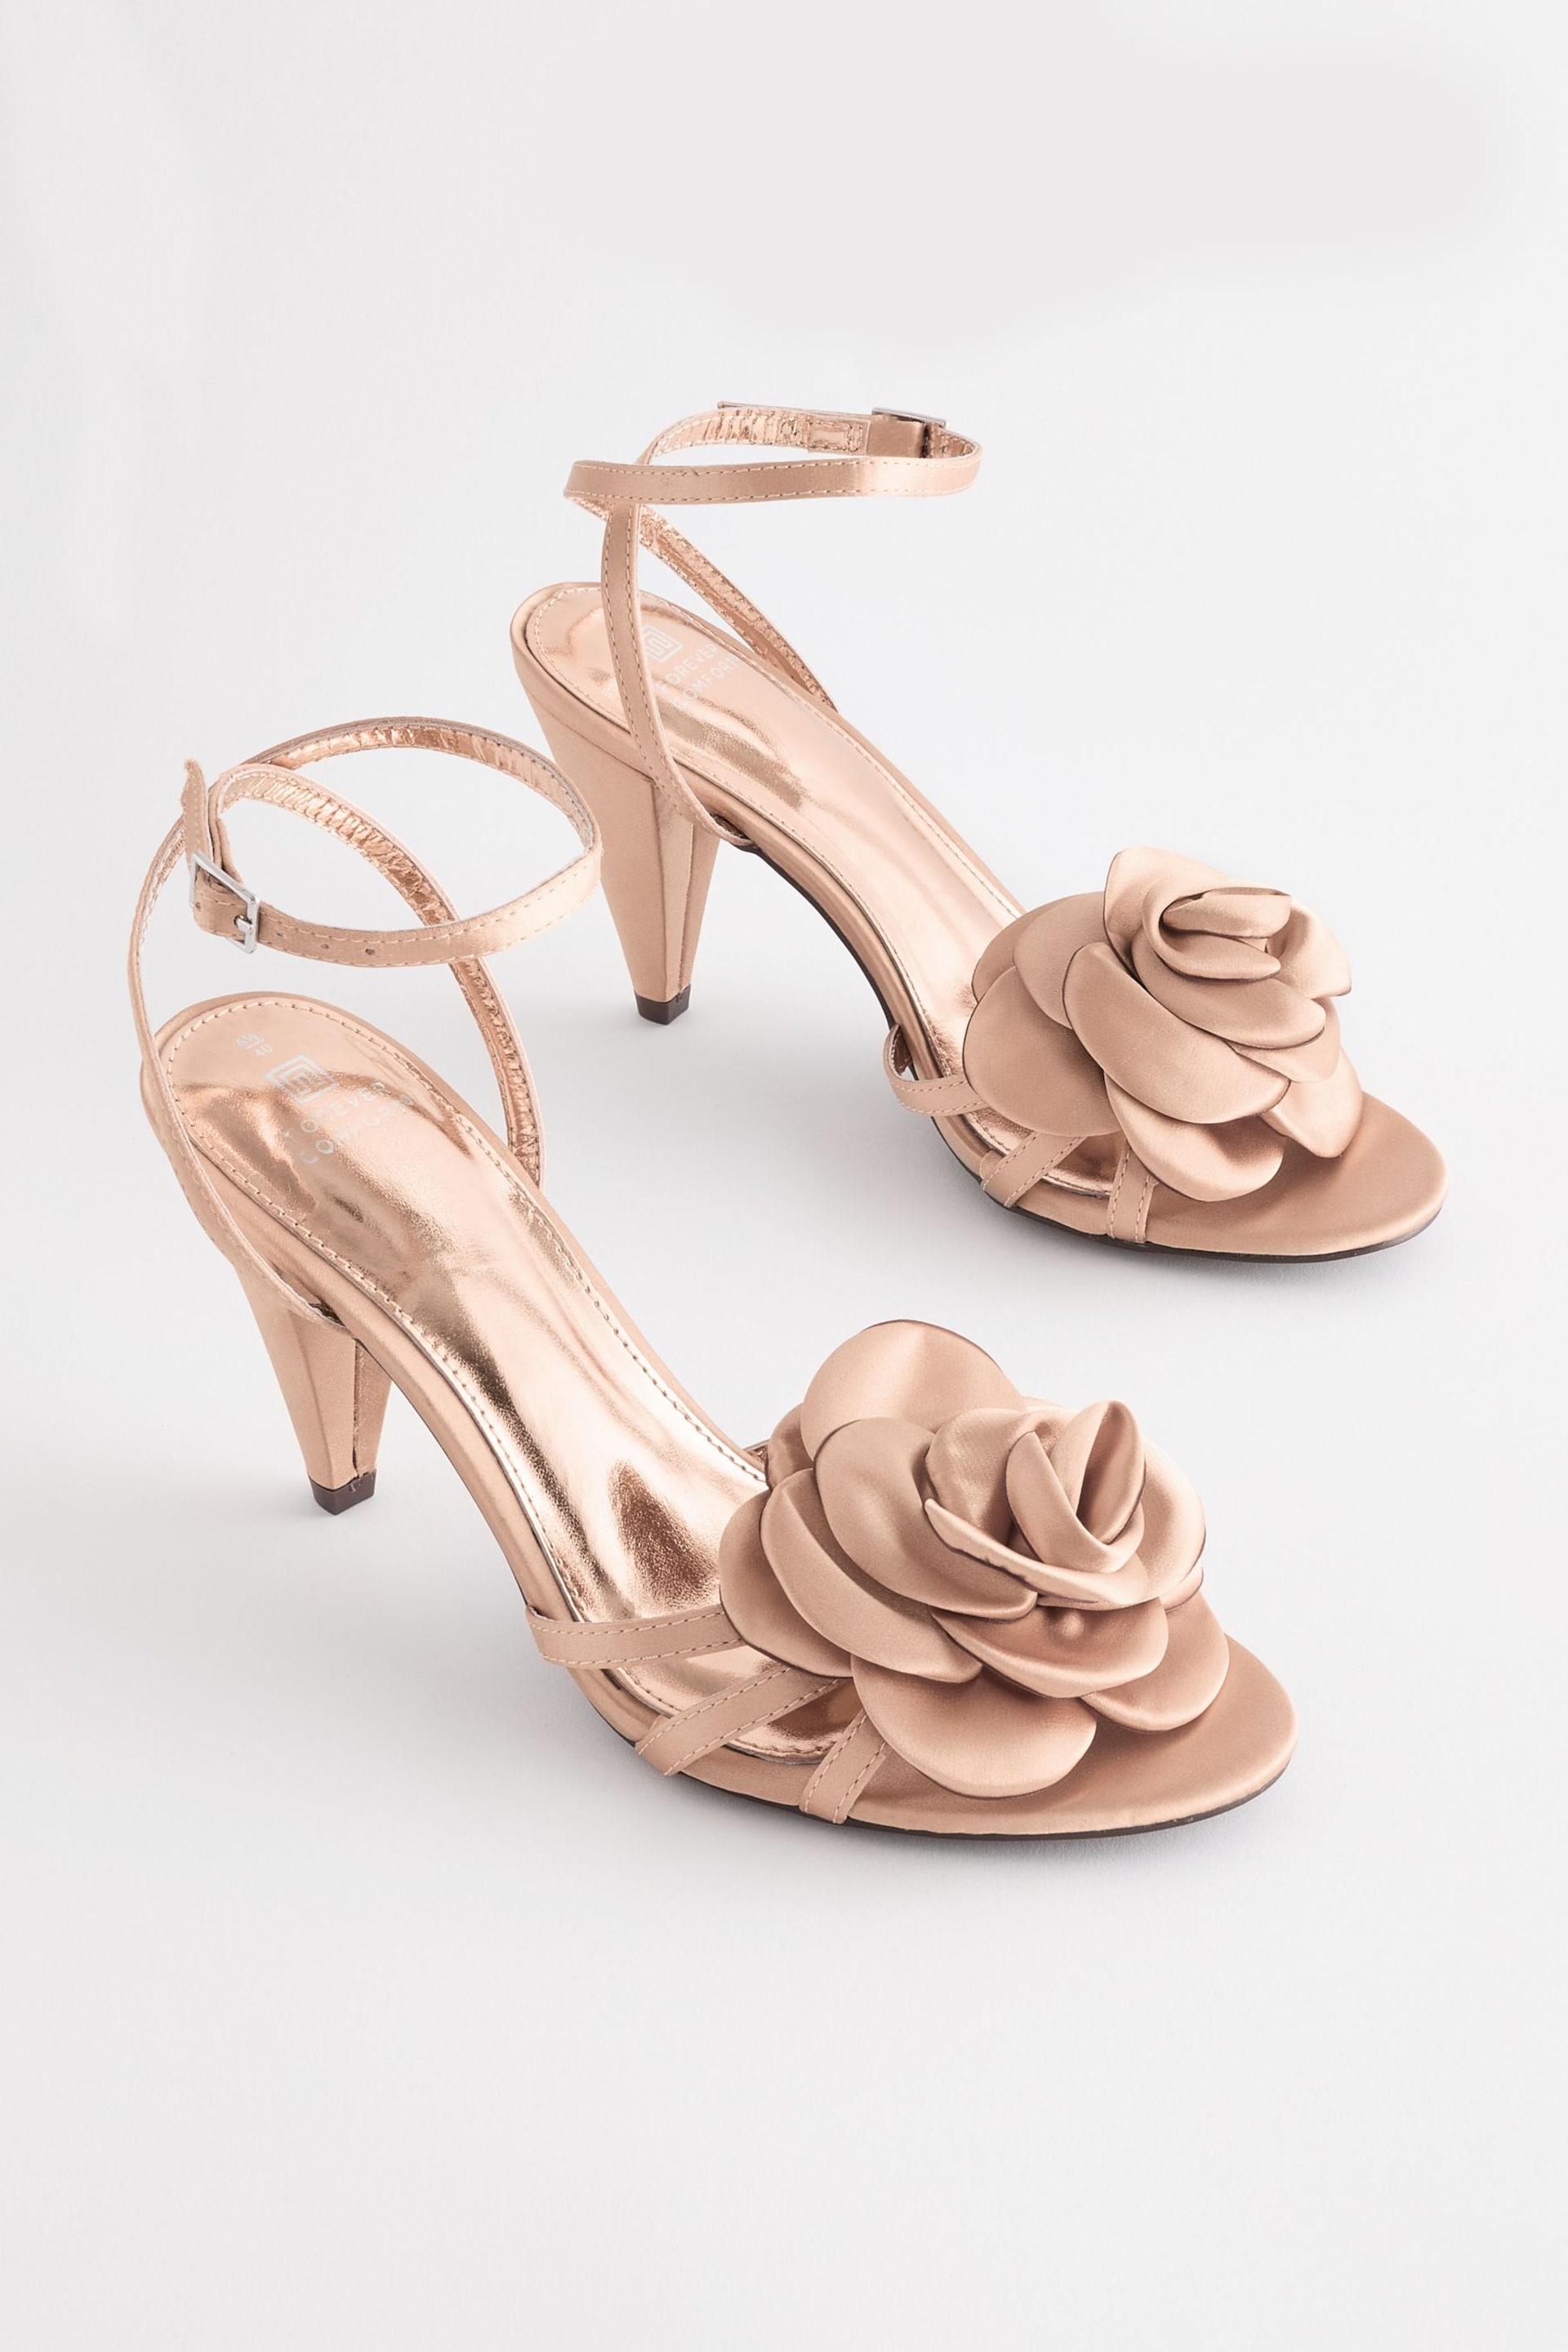 Nude Forever Comfort® Satin Flower Heeled Sandals - Image 1 of 7